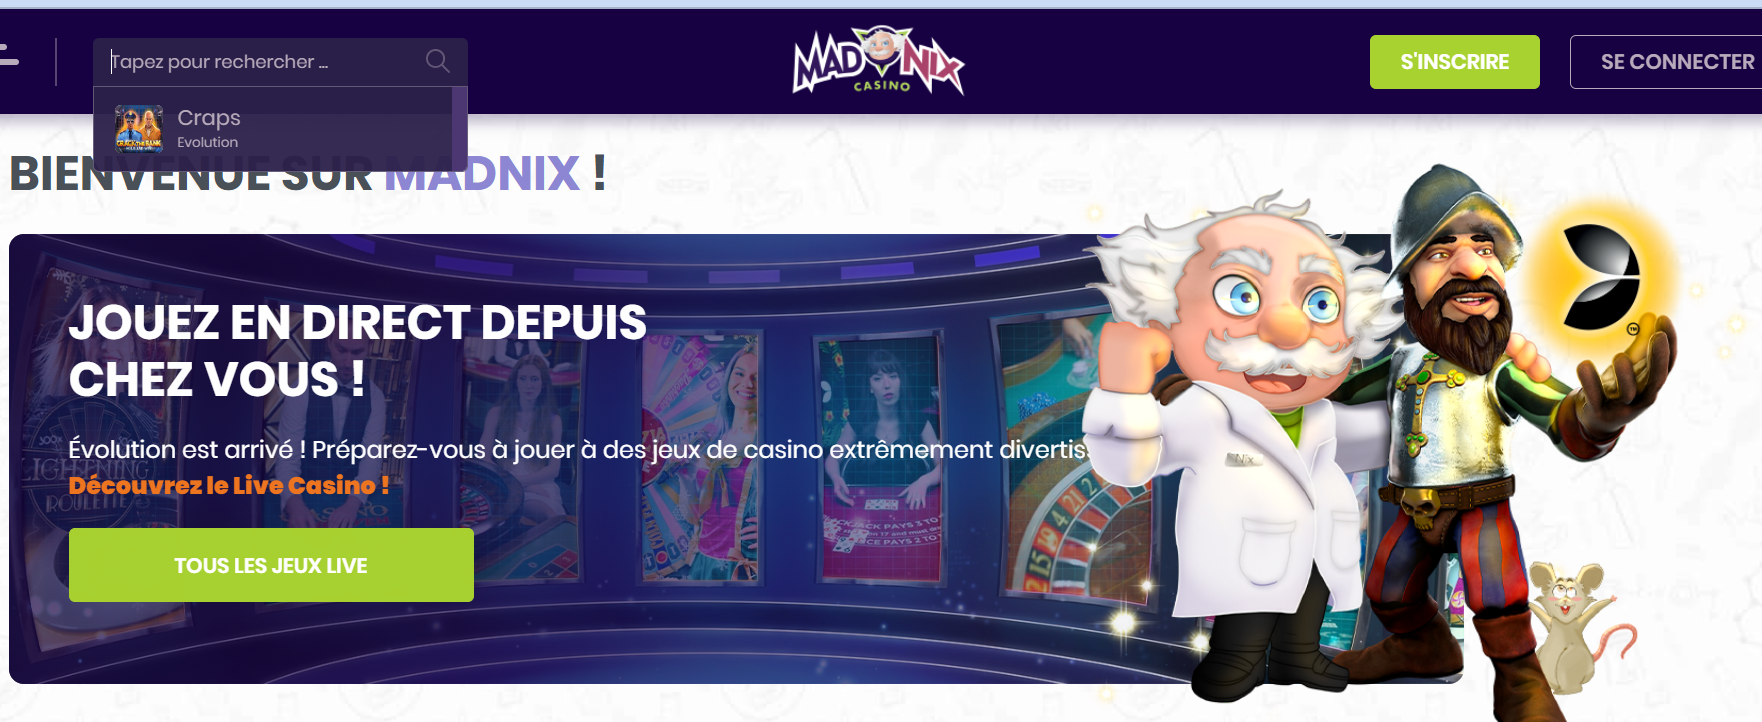 Meilleurs Craps casinos de France :Madnix